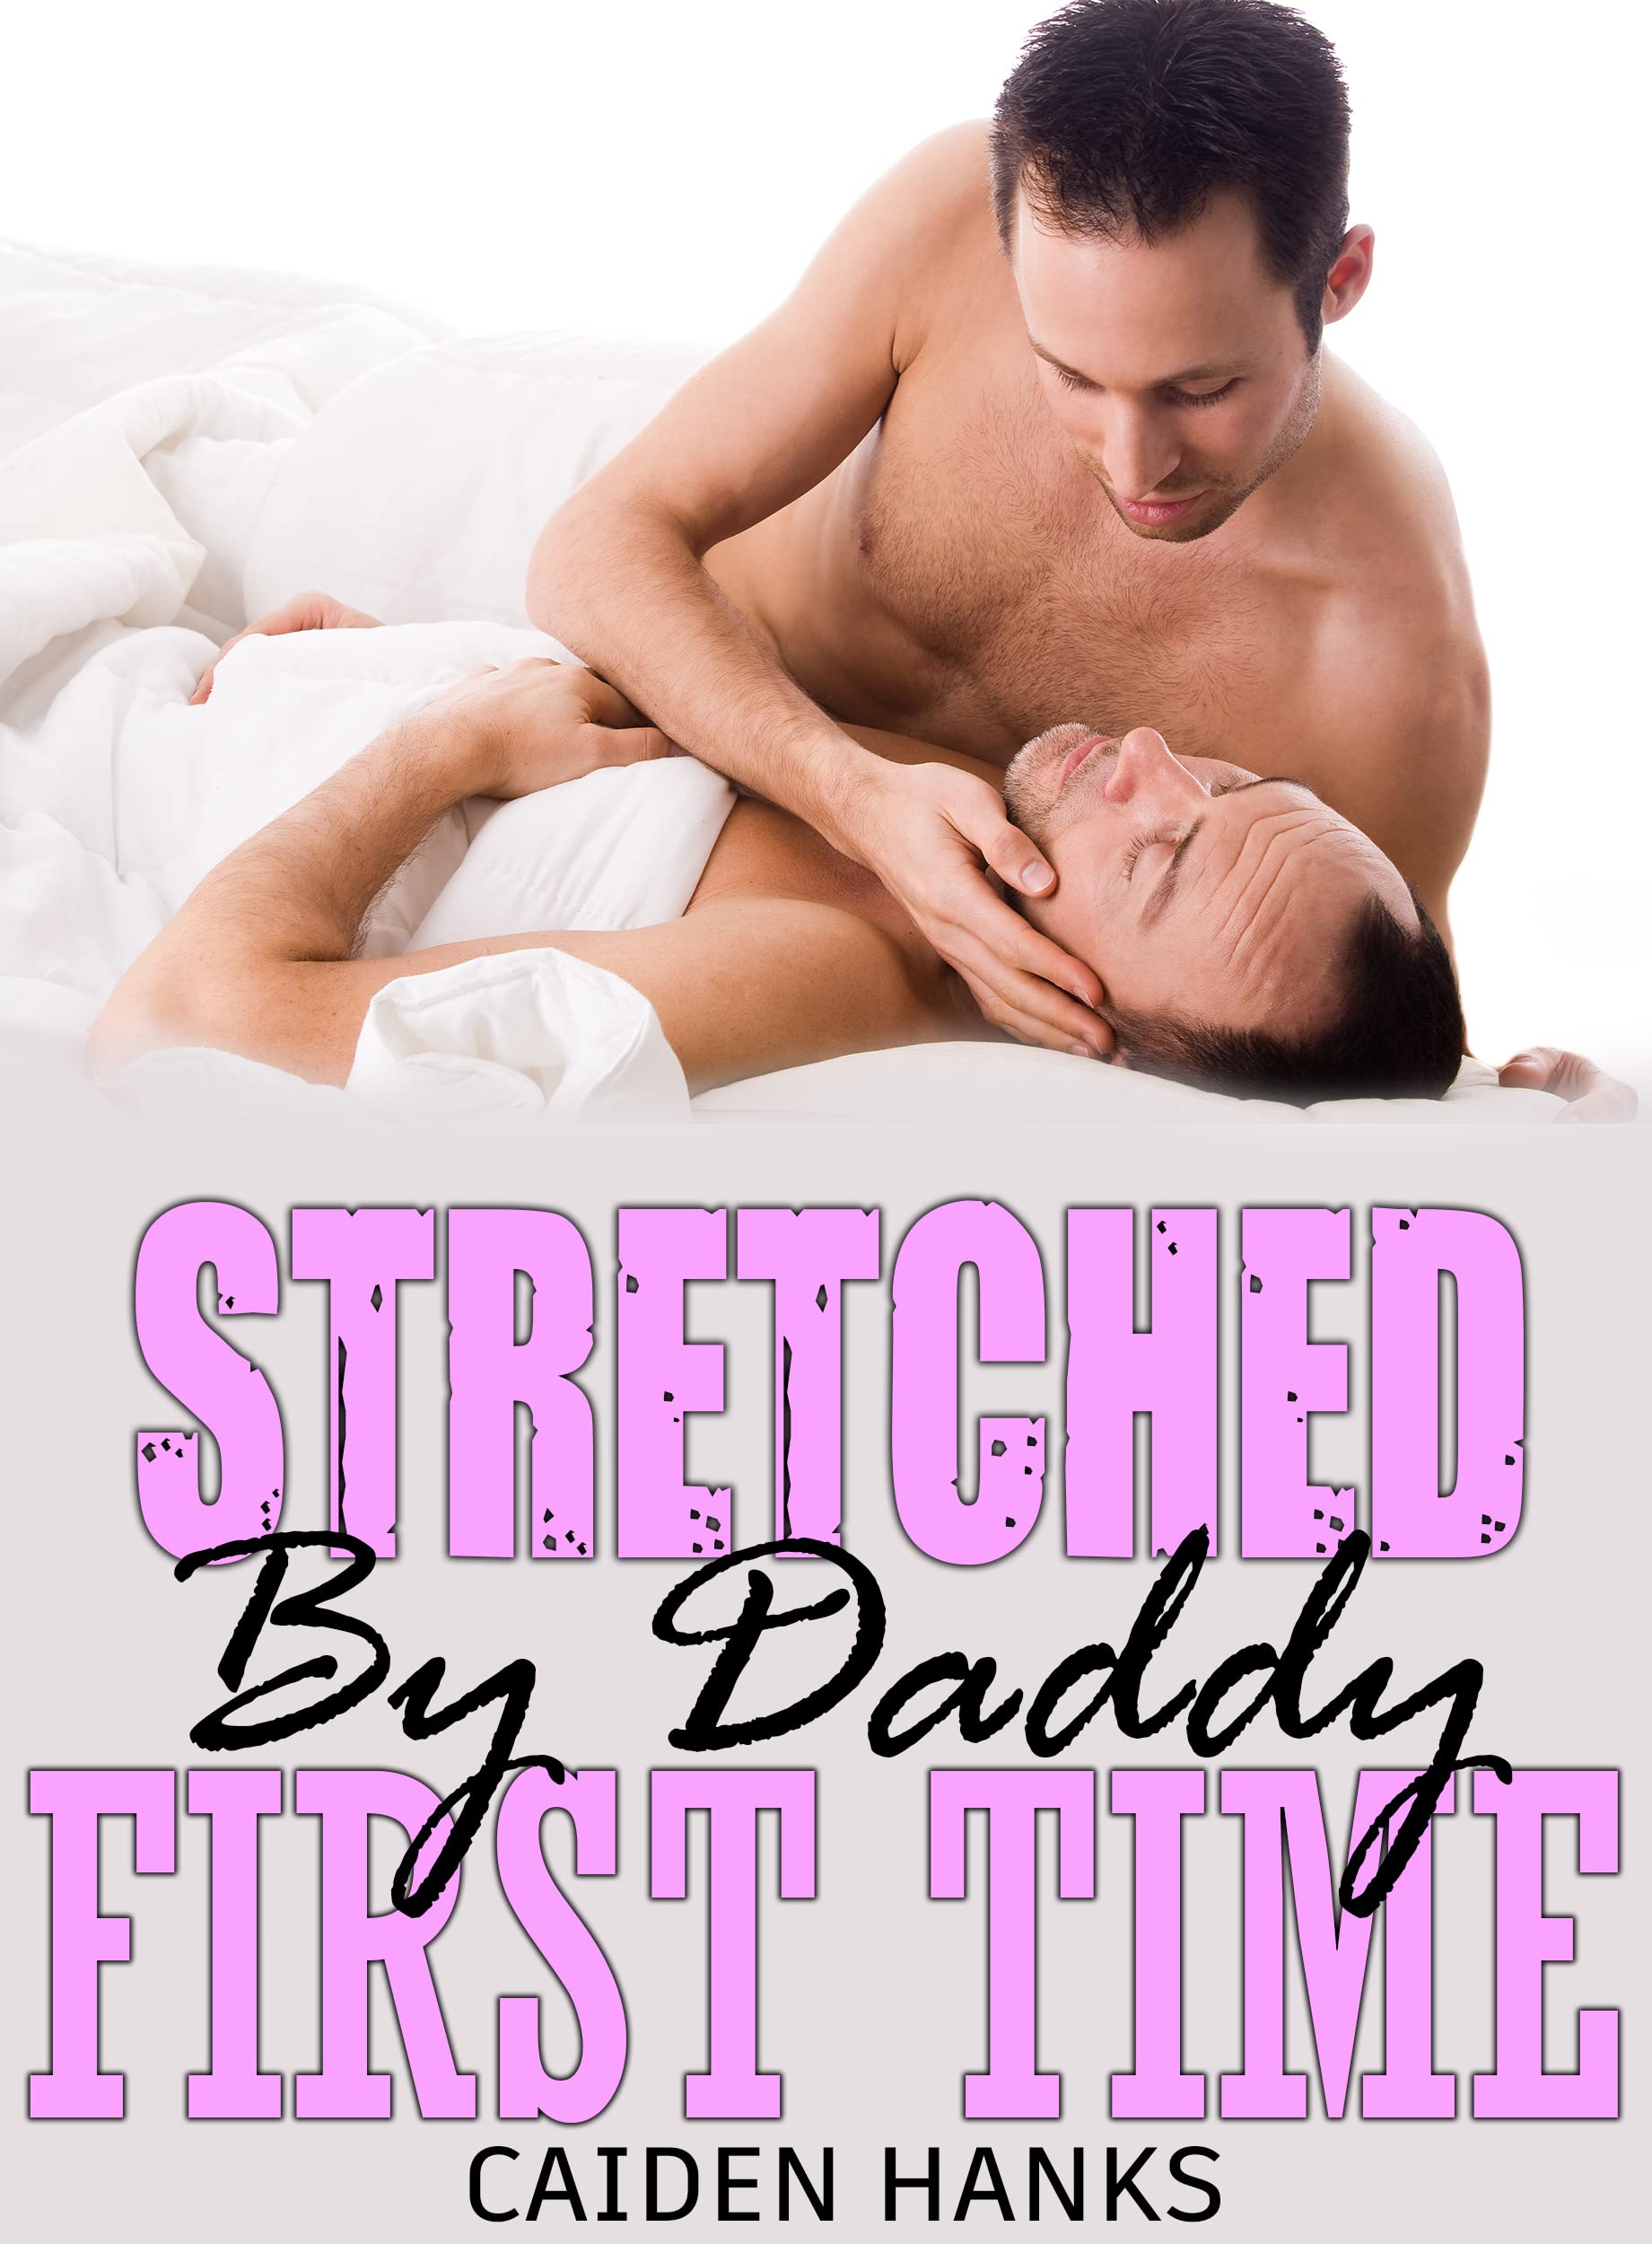 derek buffum recommends help me stretch daddy pic